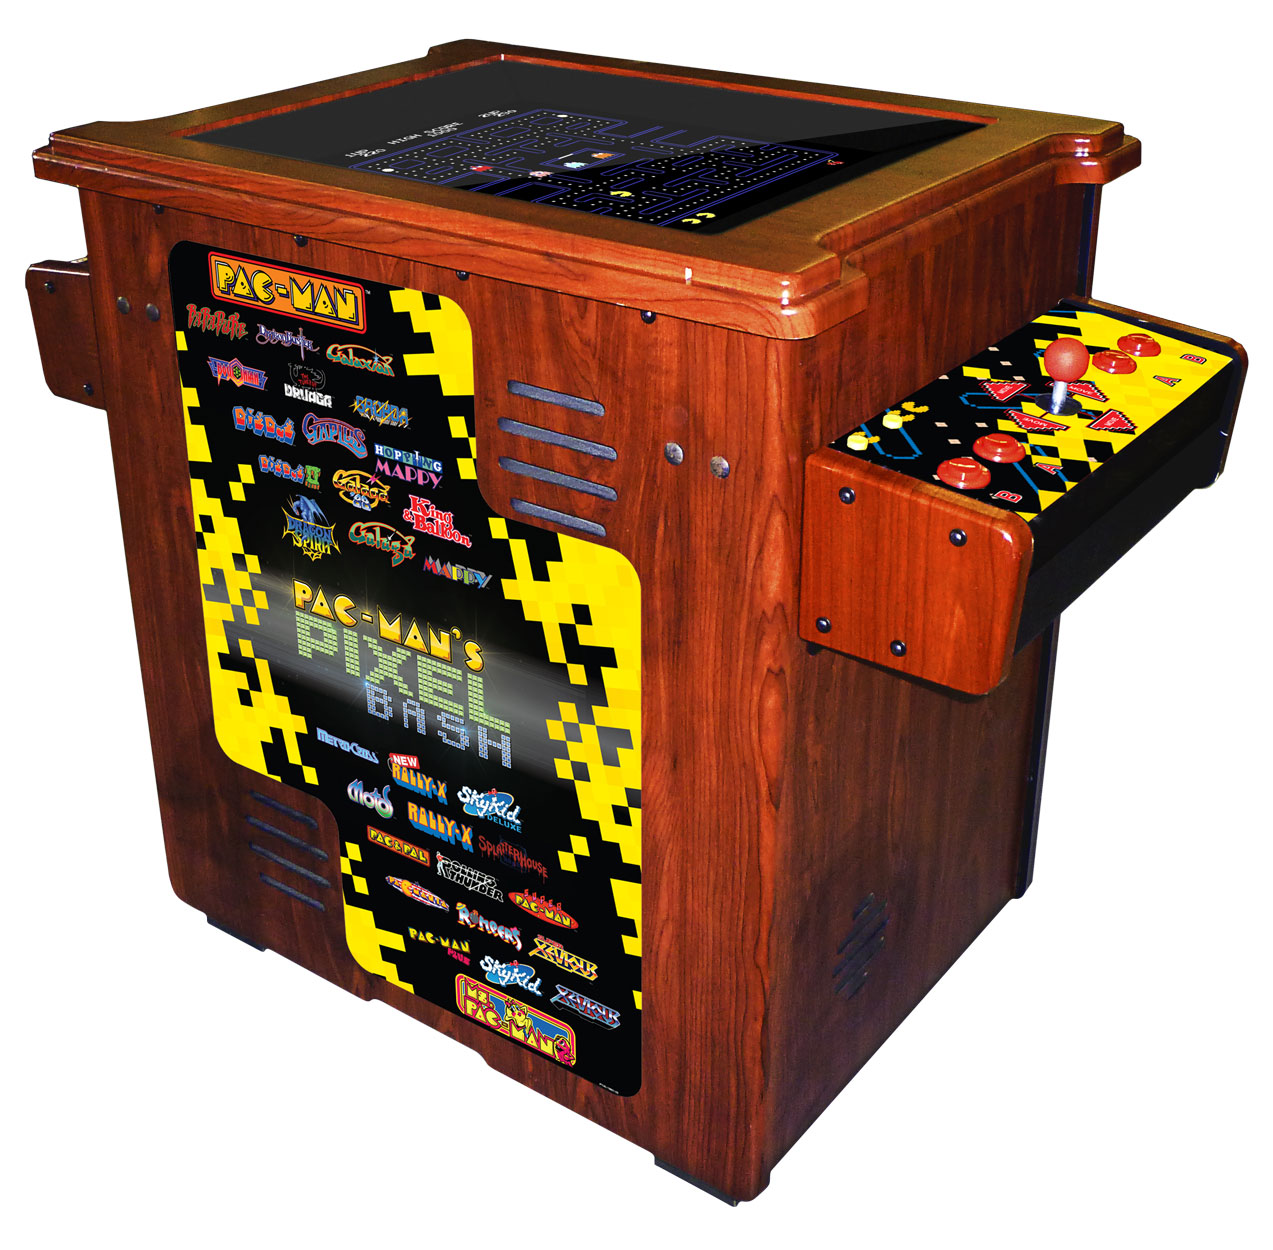 Pac-Man Pixel Bash cocktail model arcade machine Menomonee Falls